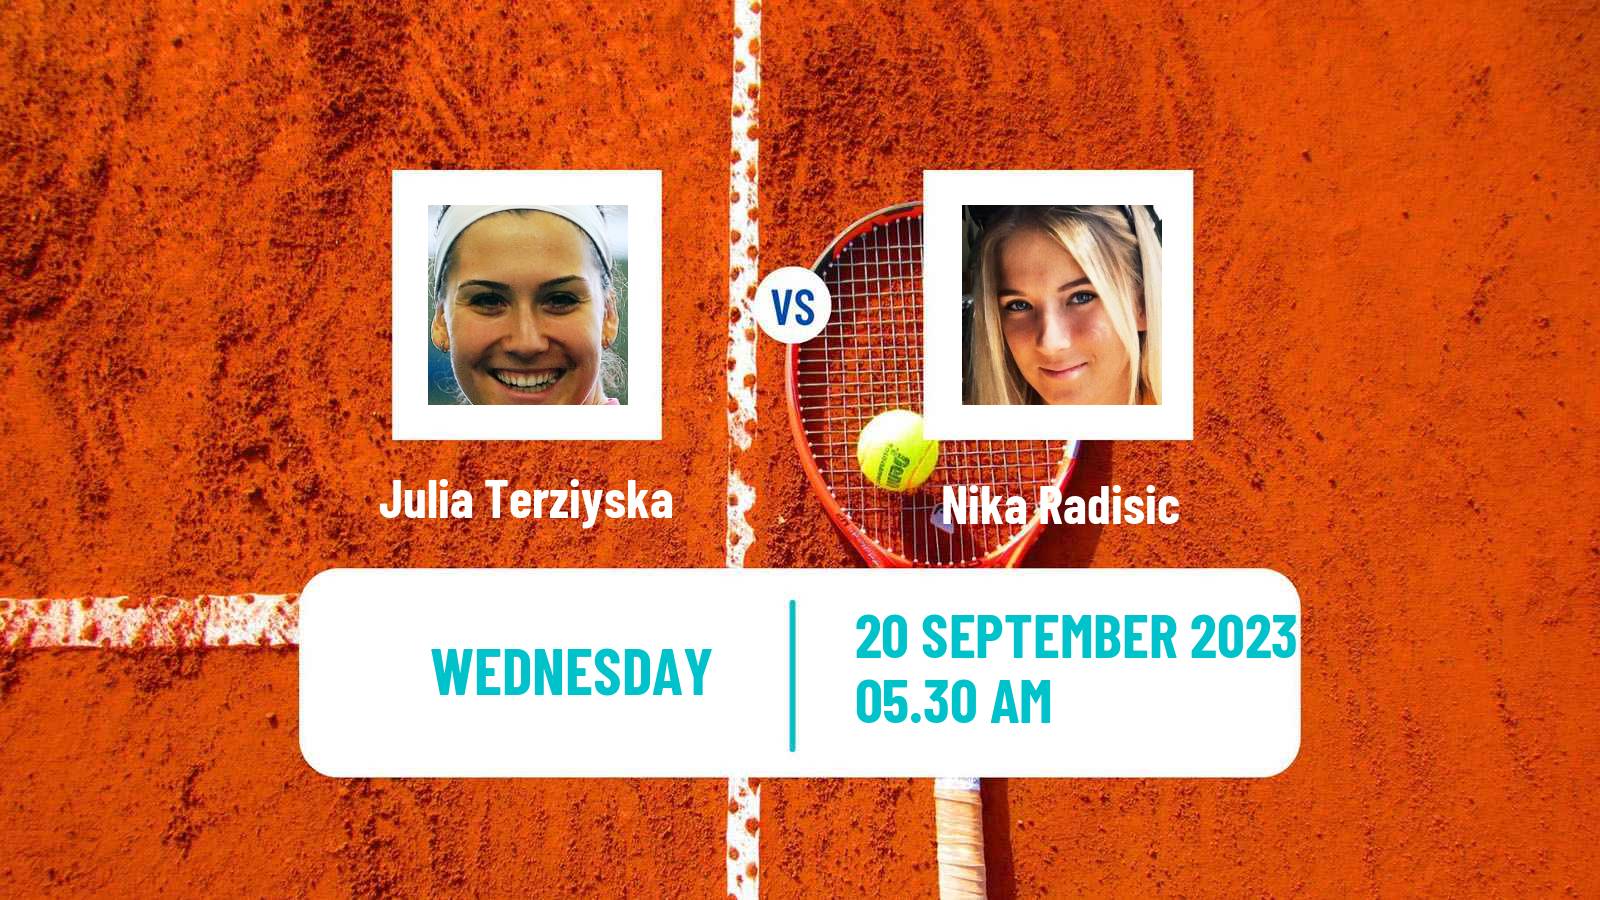 Tennis ITF W40 Pazardzhik Women Julia Terziyska - Nika Radisic